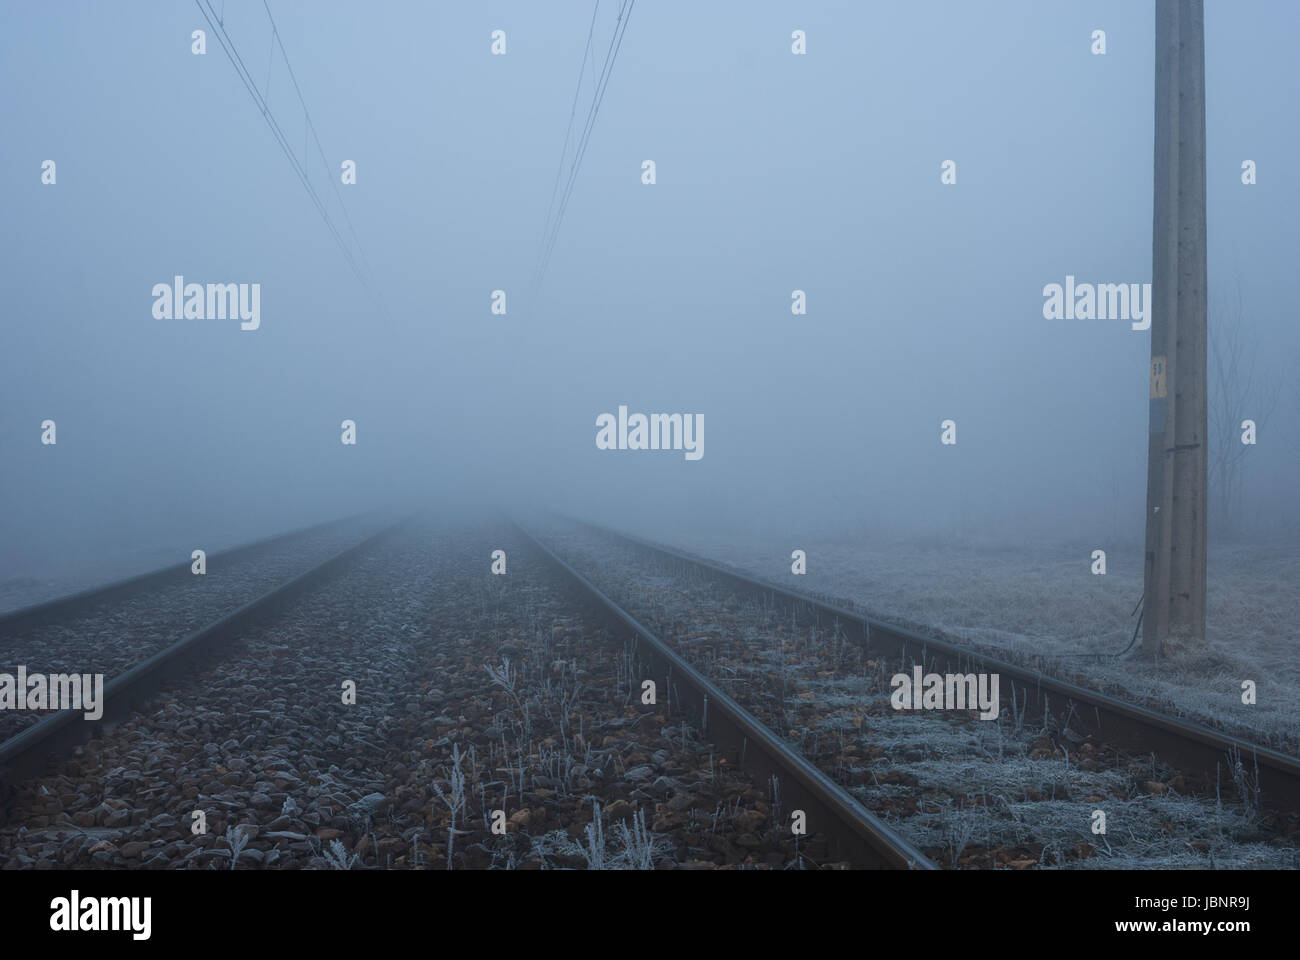 Railroad tracks in the fog Stock Photo